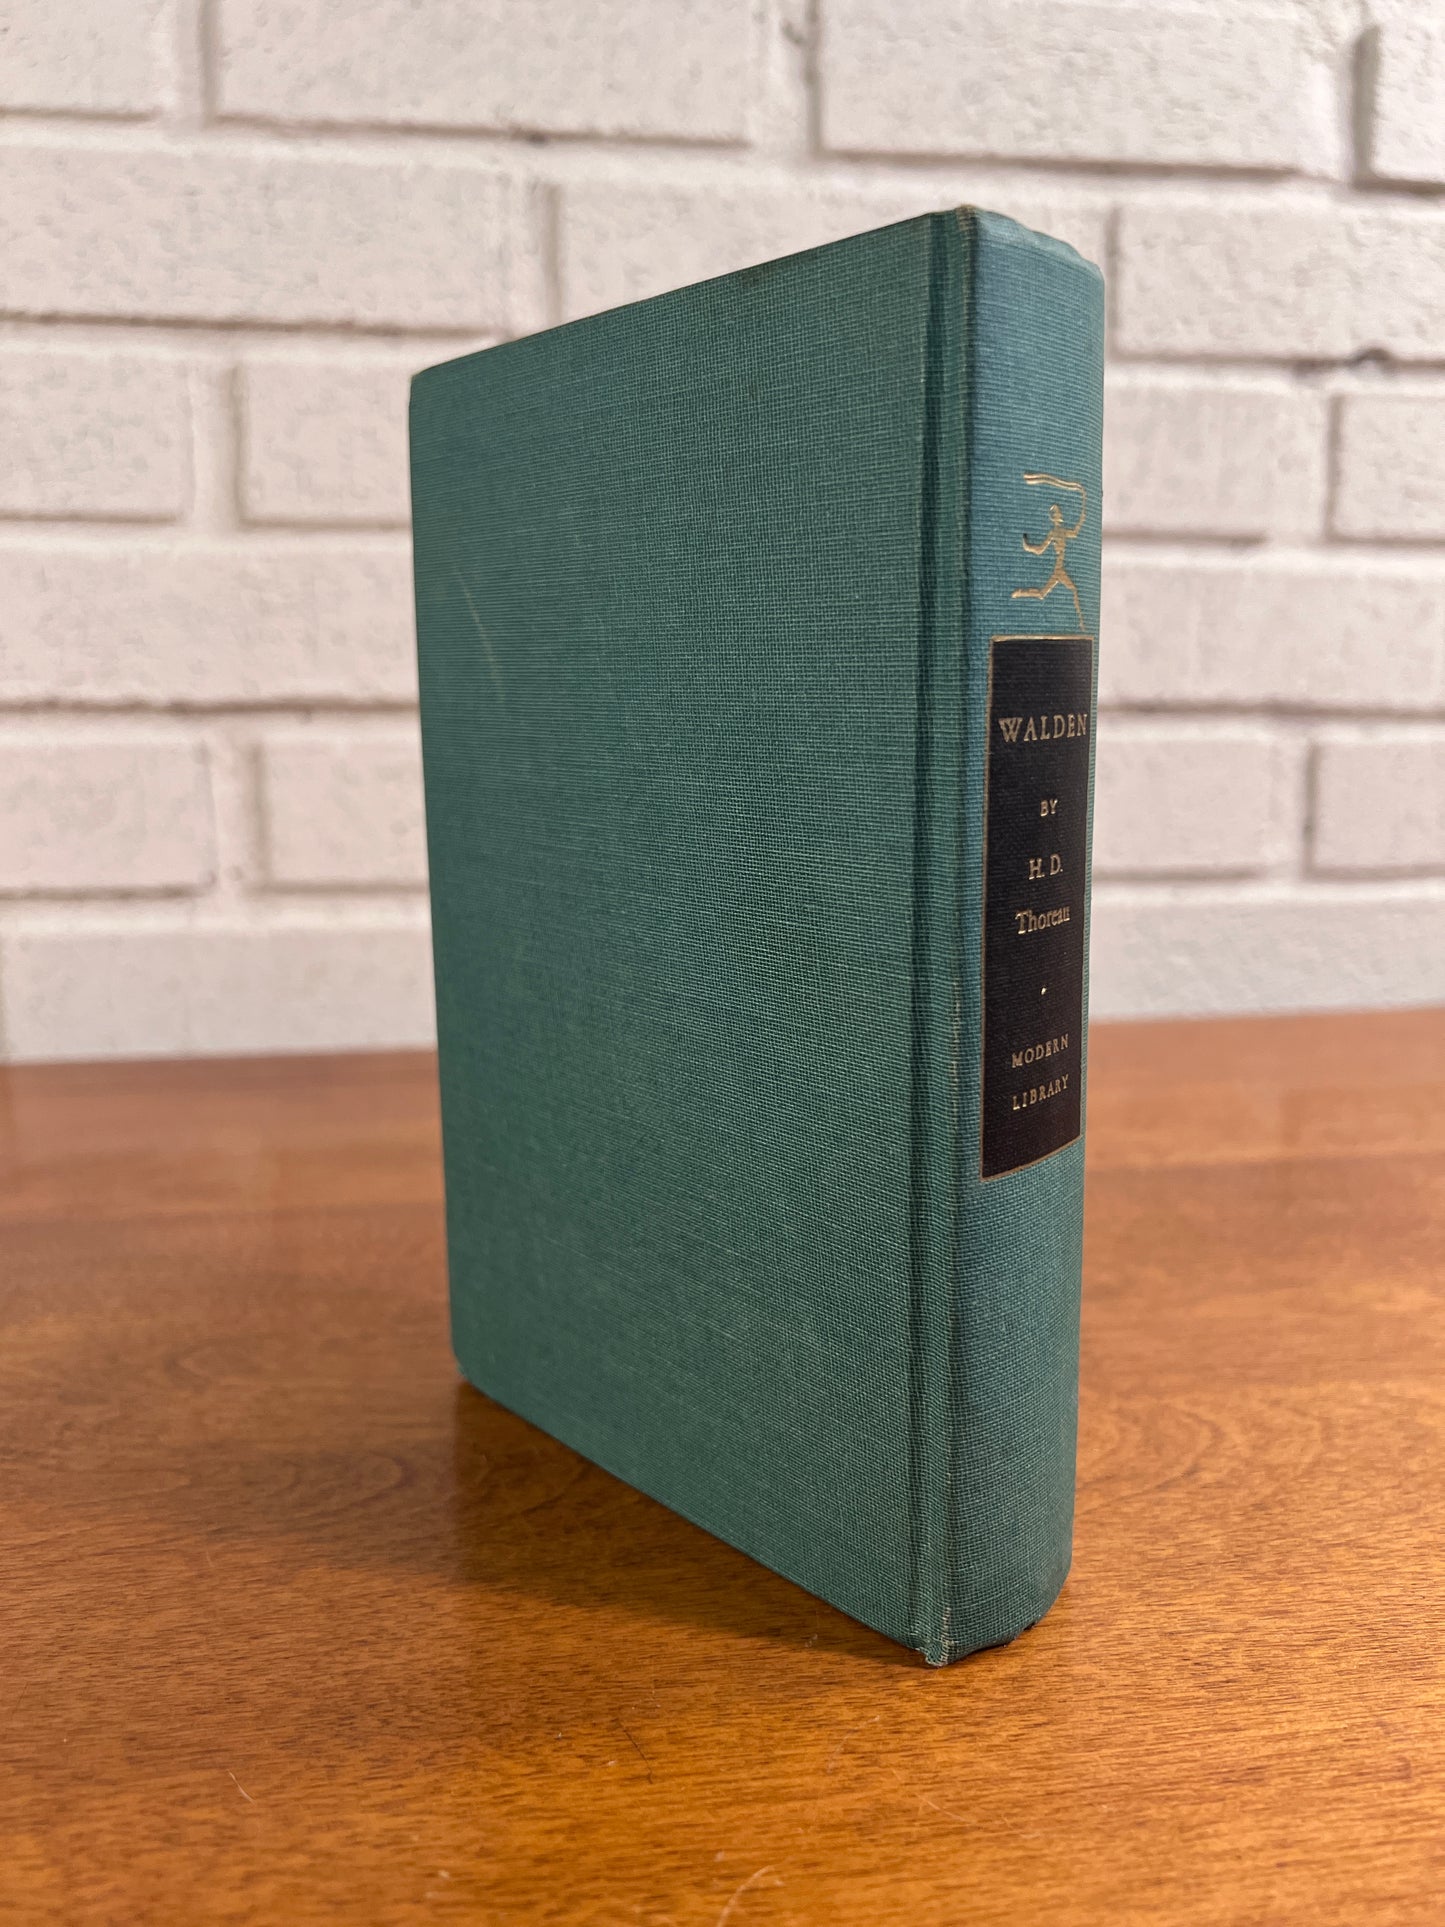 Walden & Other Writings of Henry David Thoreau